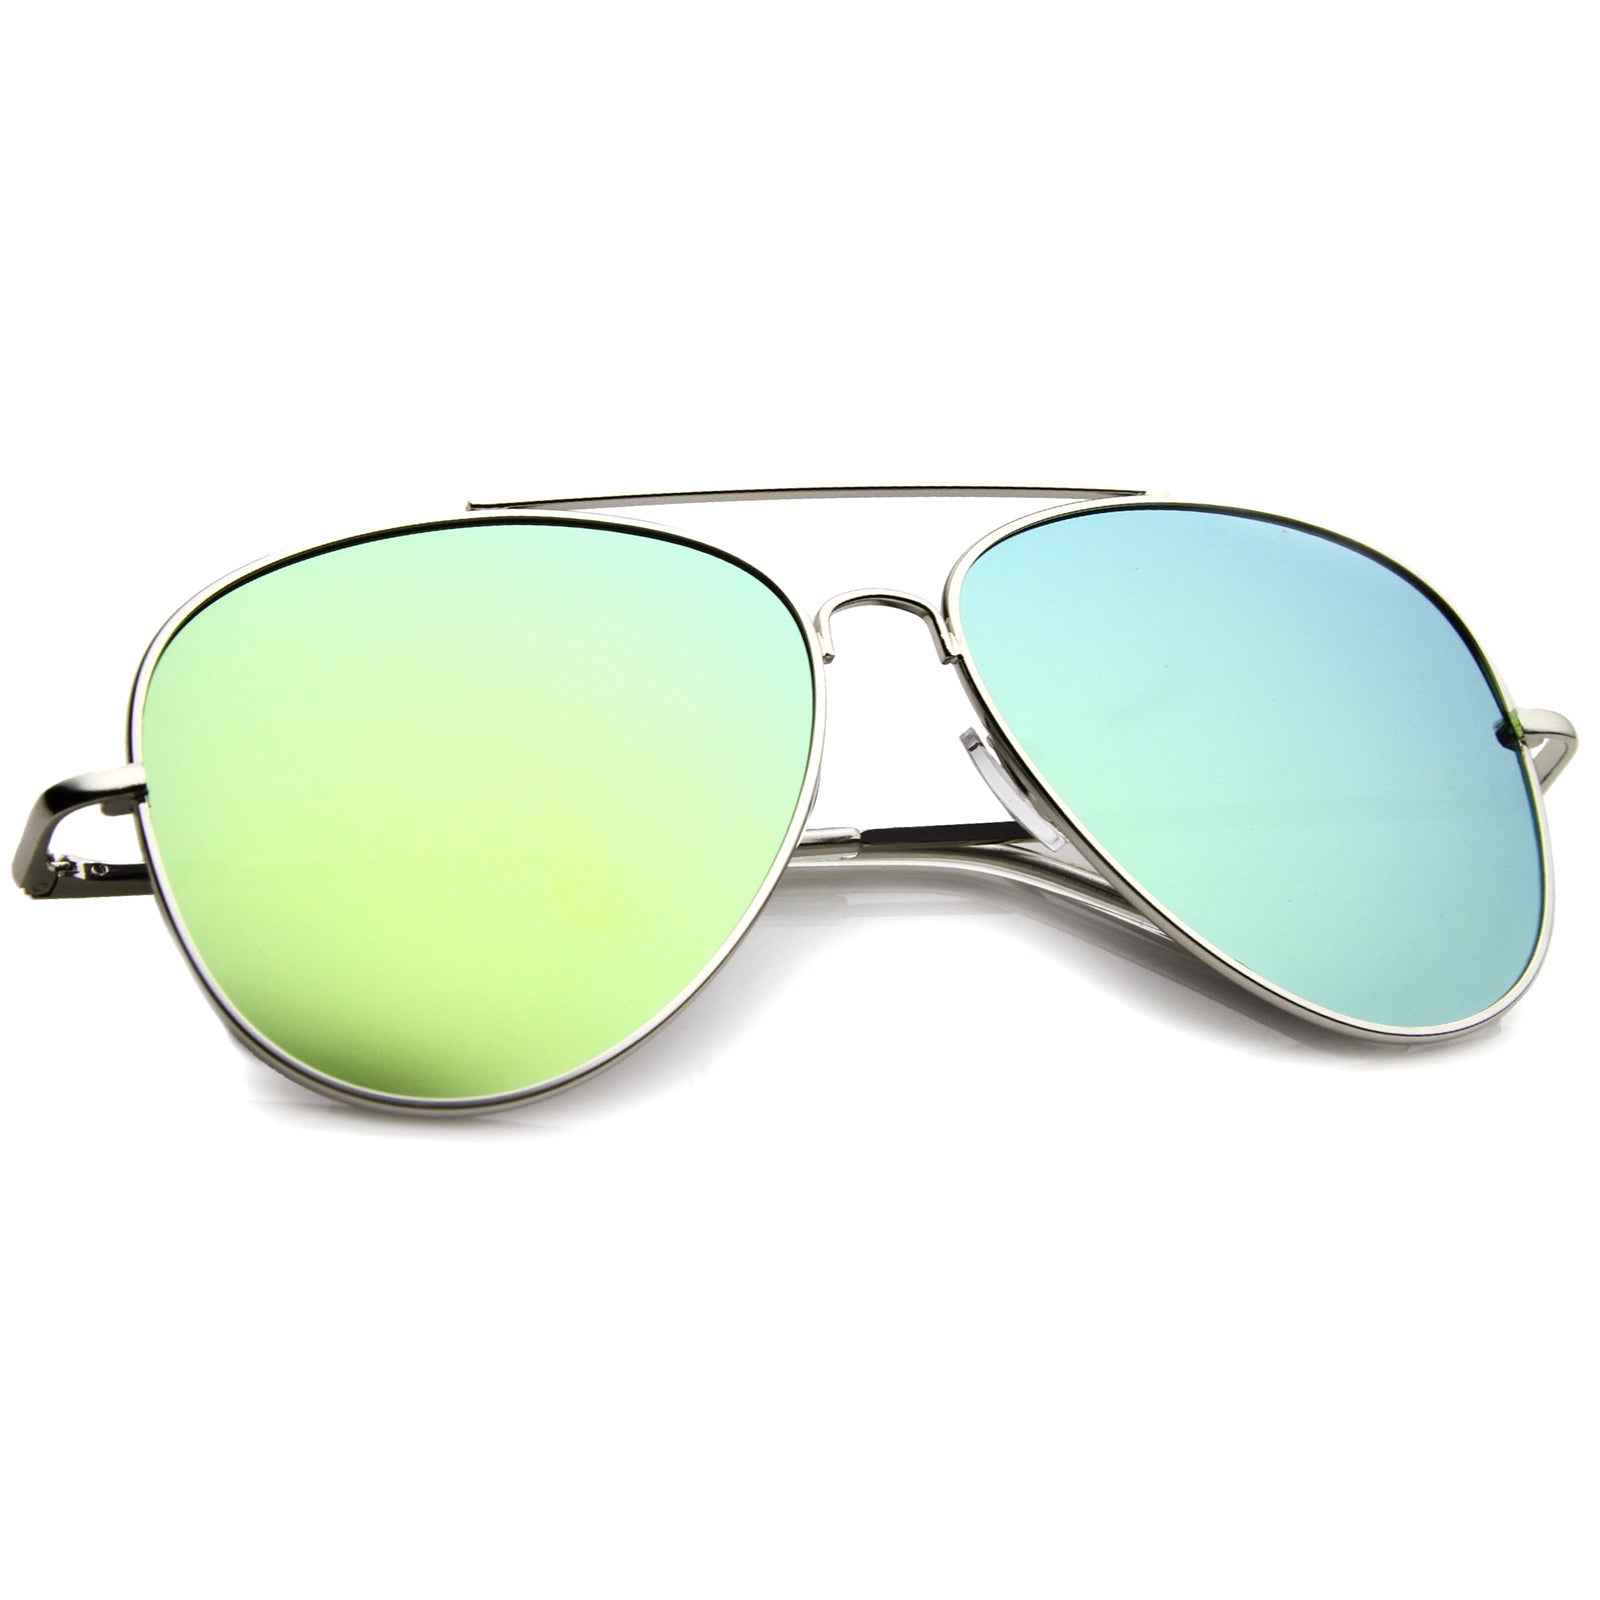 NEW SUNGLASSES FENDI FF 0407/G/S GOlD METAL FRAME | Metal aviators, Green  aviator sunglasses, Round sunglasses women